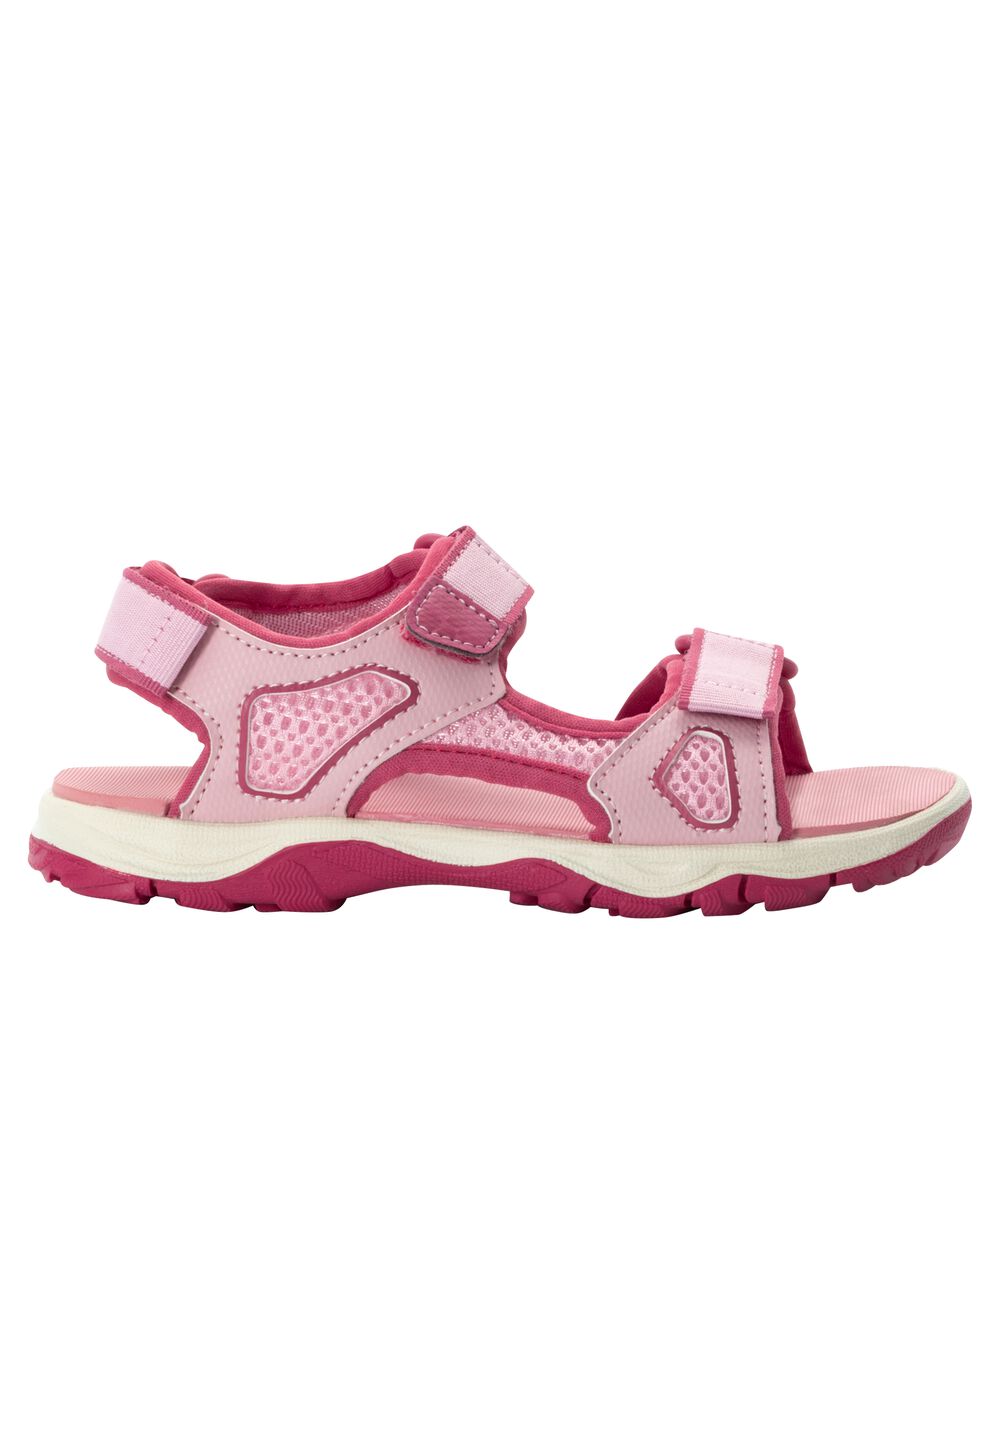 Jack Wolfskin Kinder Sandalen Taraco Beach Sandal Kids 39 soft pink soft pink von Jack Wolfskin